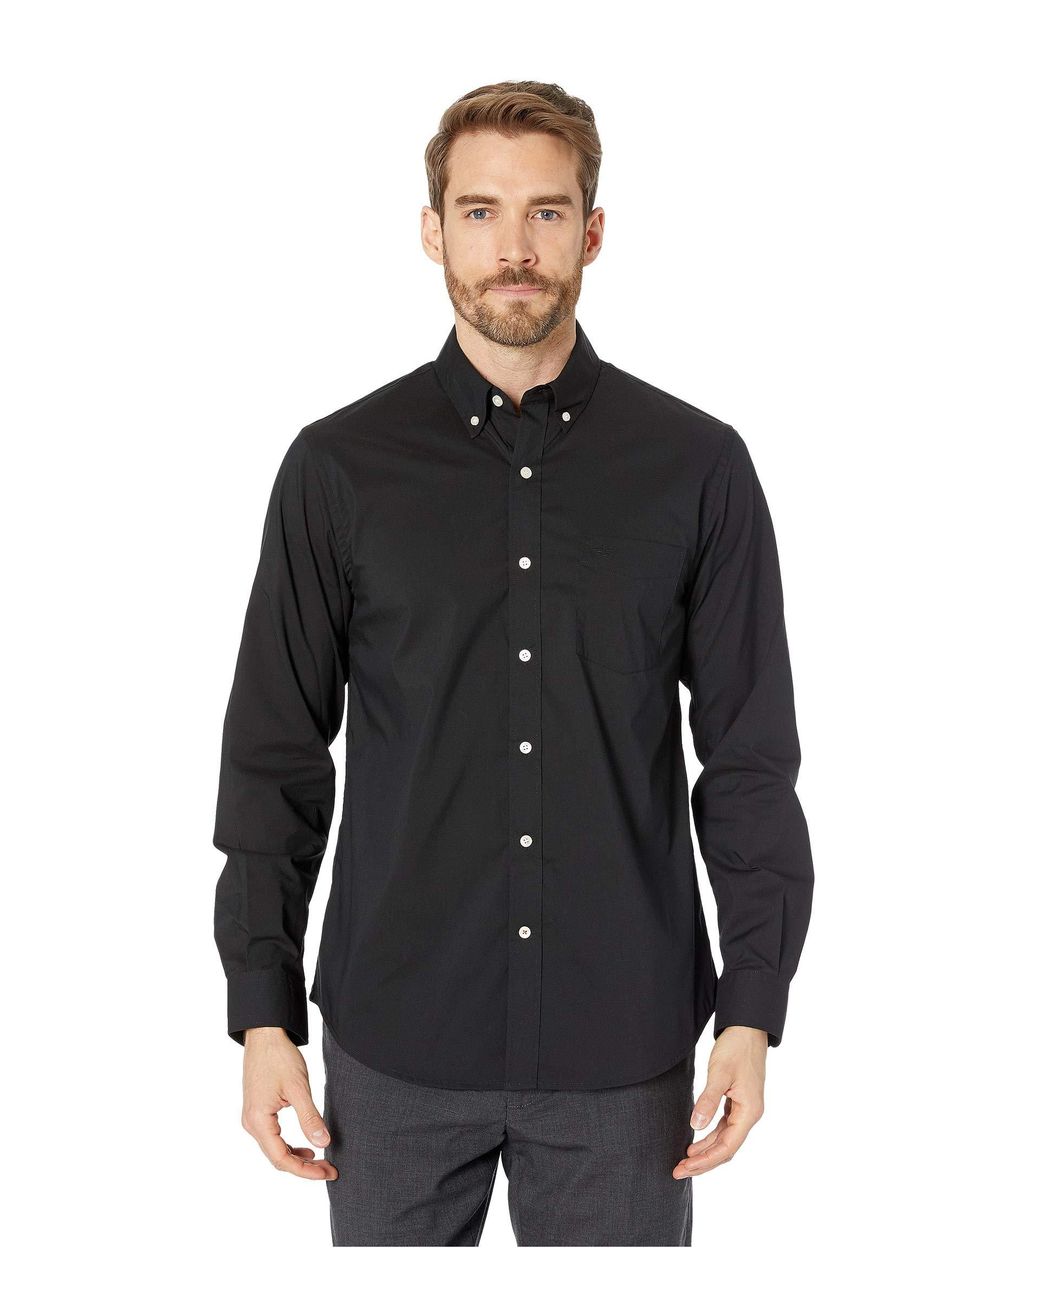 Dockers Long Sleeve Signature Comfort Flex Shirt in Black for Men - Lyst